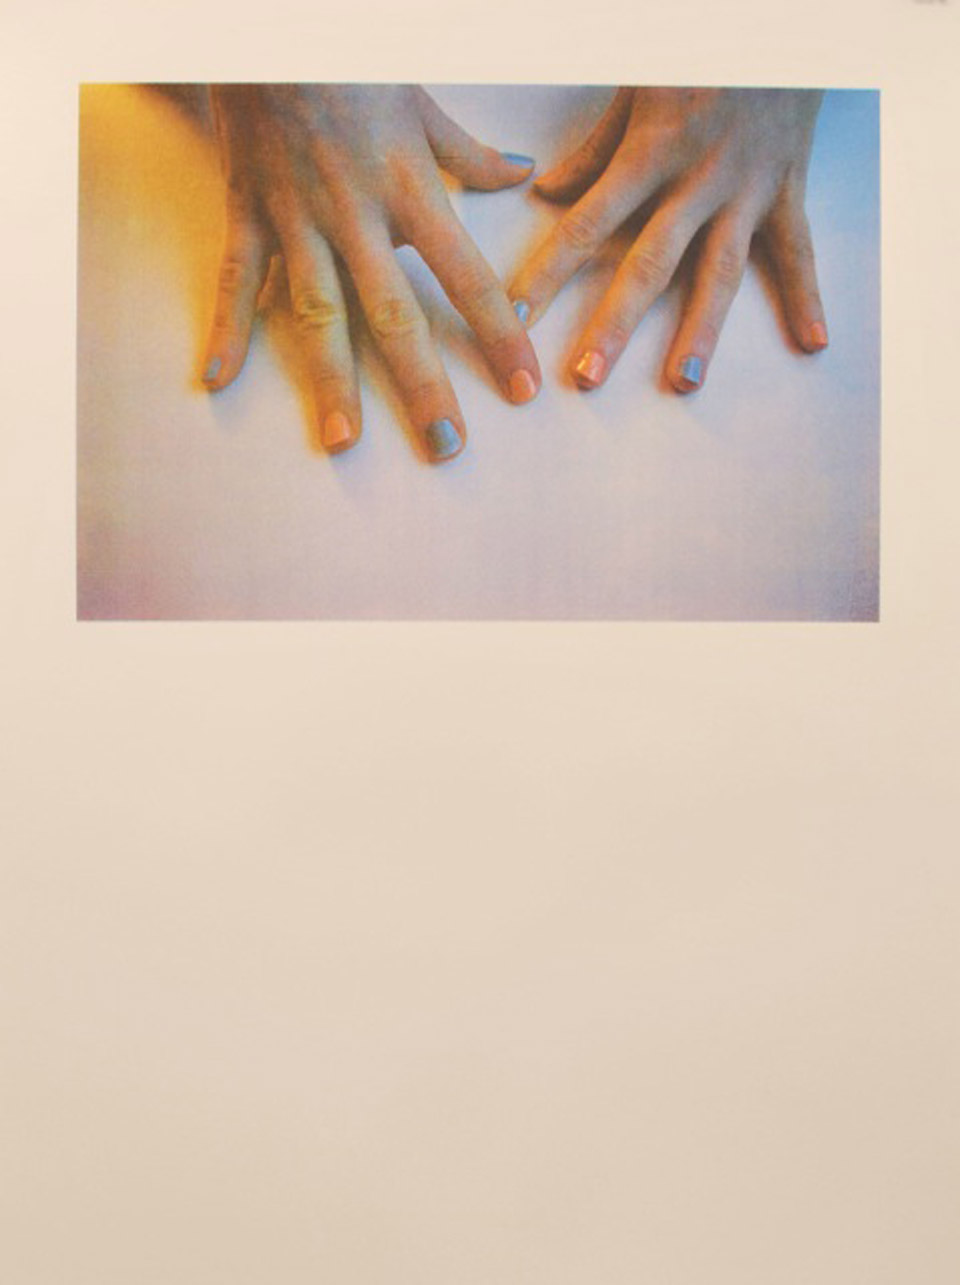 <p>Fingers, 2013, screen print on paper, 60 x 70 cm</p>